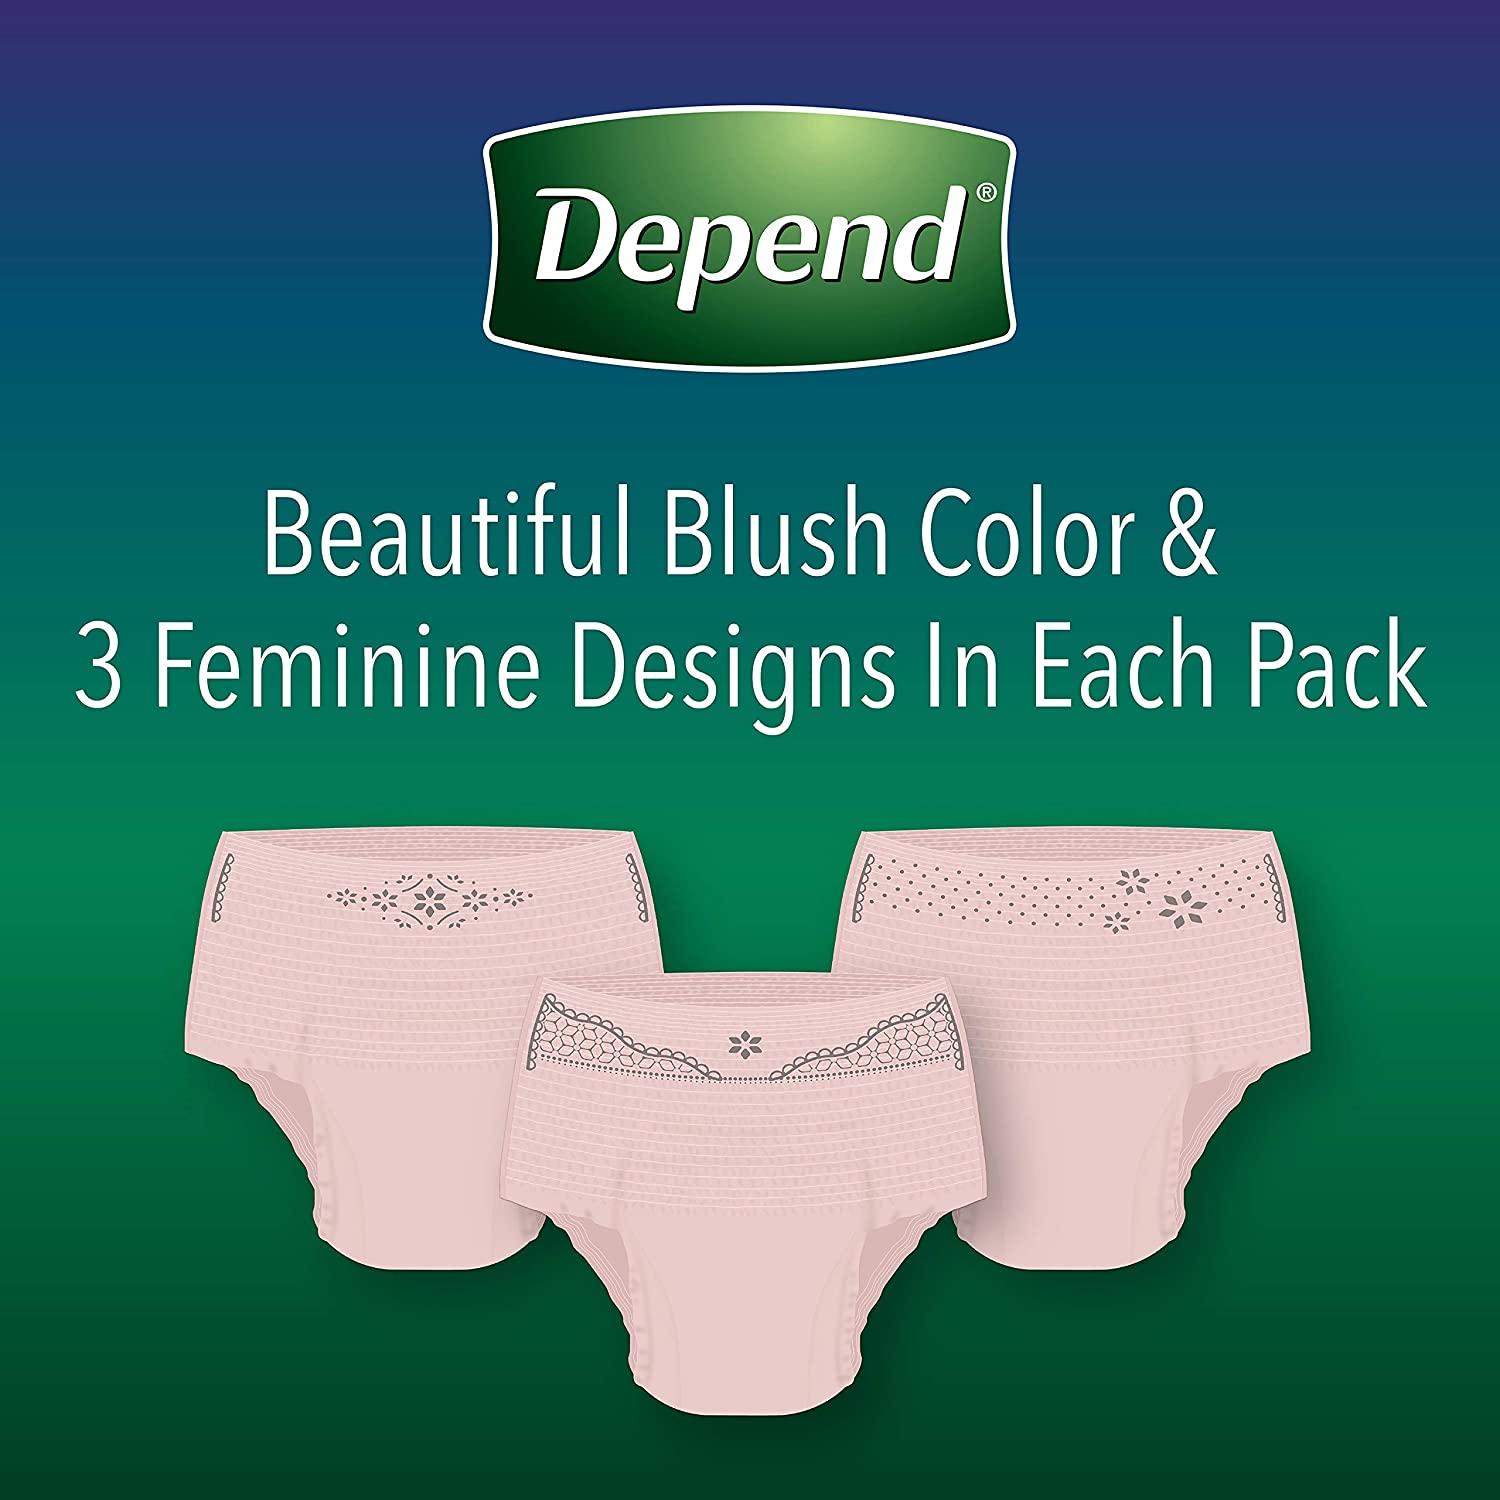 Depend Night Defense Incontinence Overnight Underwear for Women